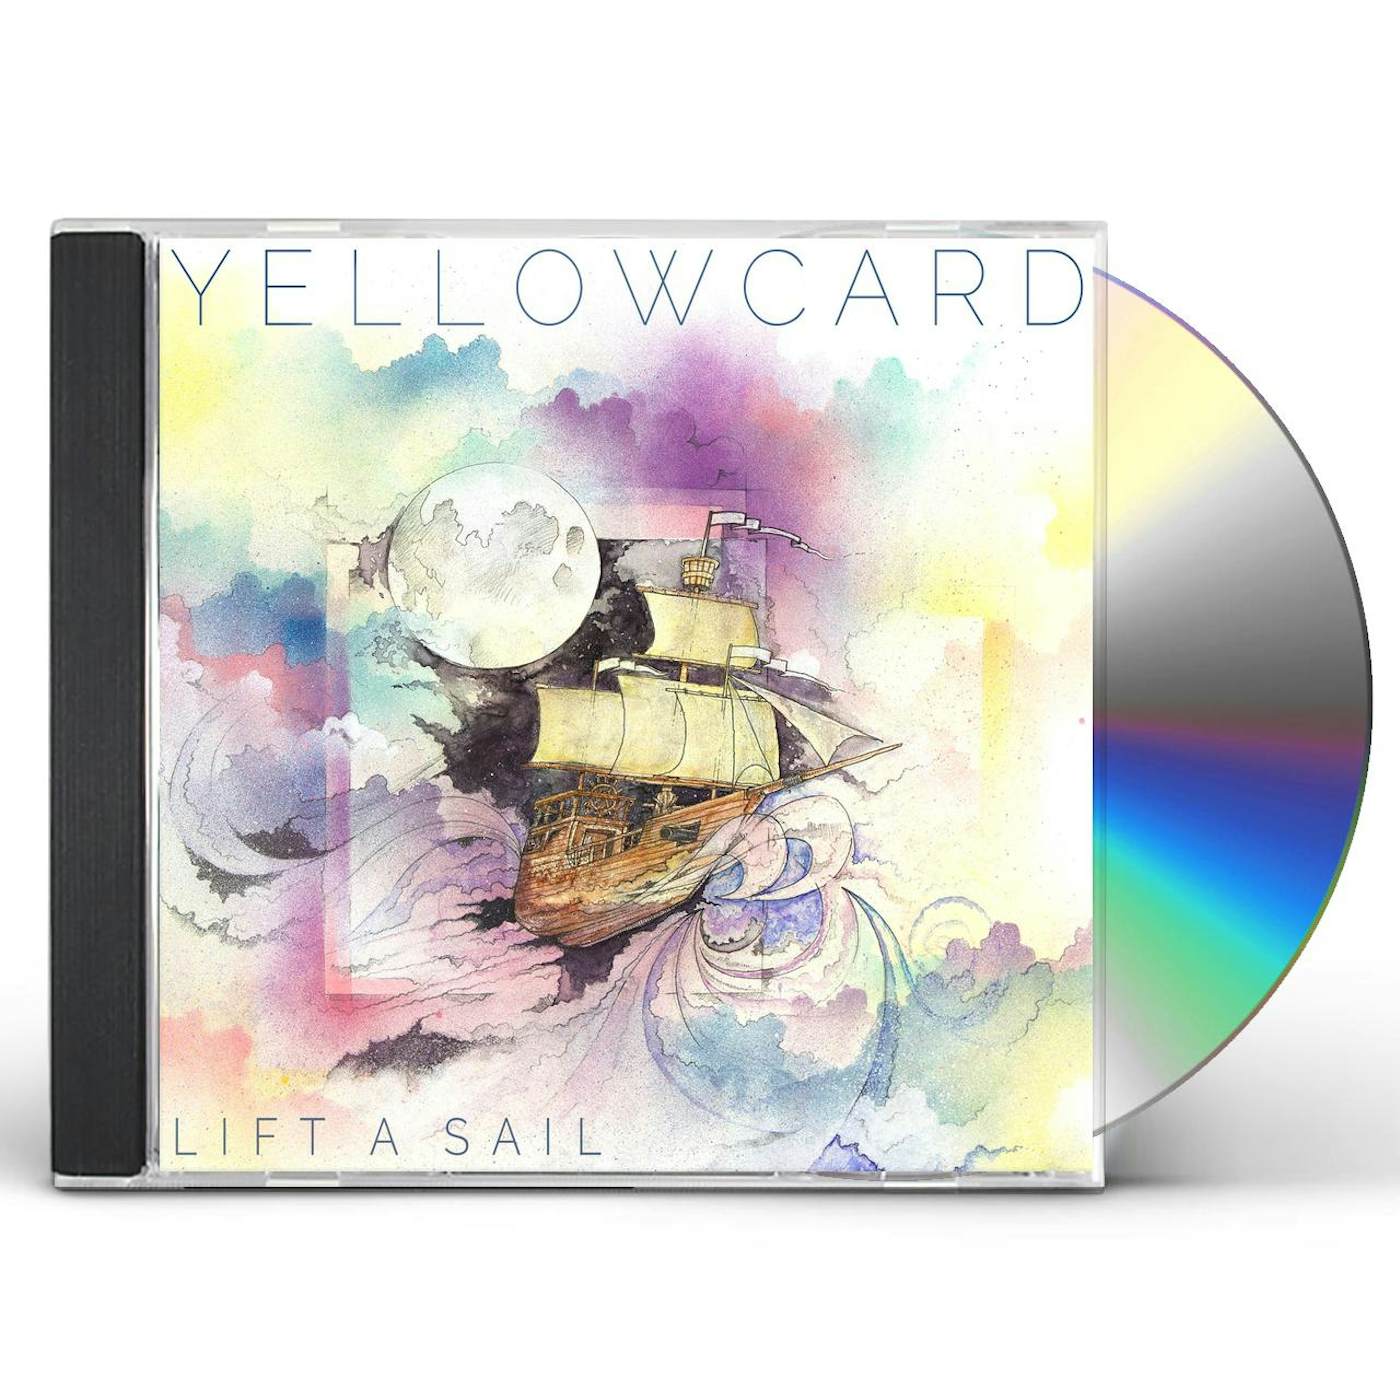 Yellowcard LIFT A SAIL CD